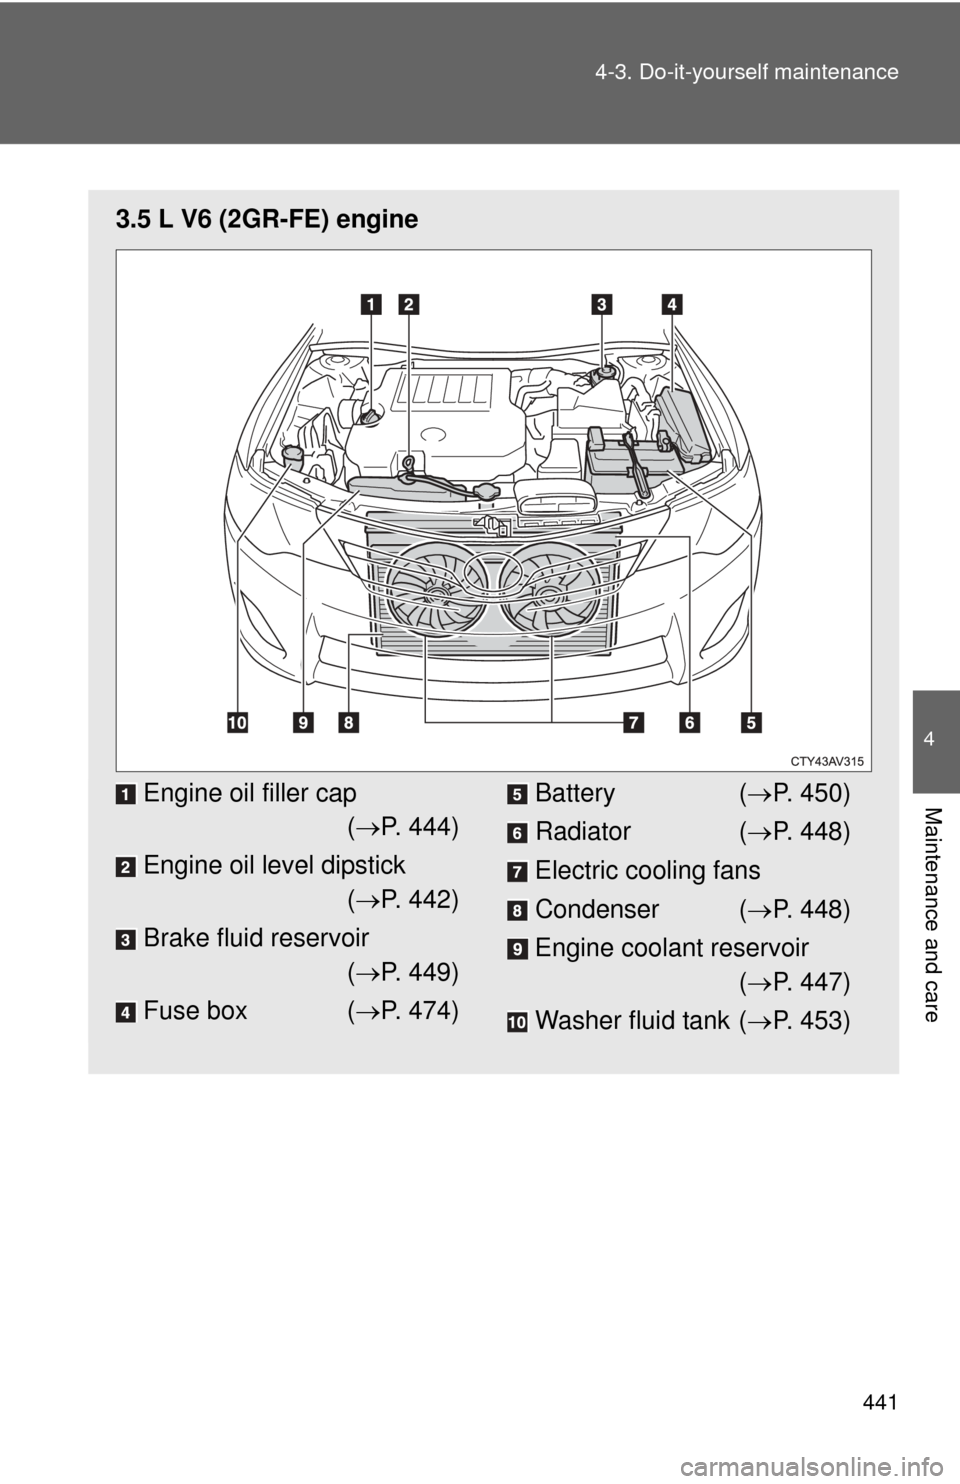 TOYOTA CAMRY 2014 XV50 / 9.G Owners Manual 441
4-3. Do-it-yourself maintenance
4
Maintenance and care
3.5 L V6 (2GR-FE) engine
Engine oil filler cap
( P. 444)
Engine oil level dipstick ( P. 442)
Brake fluid reservoir ( P. 449)
Fuse bo